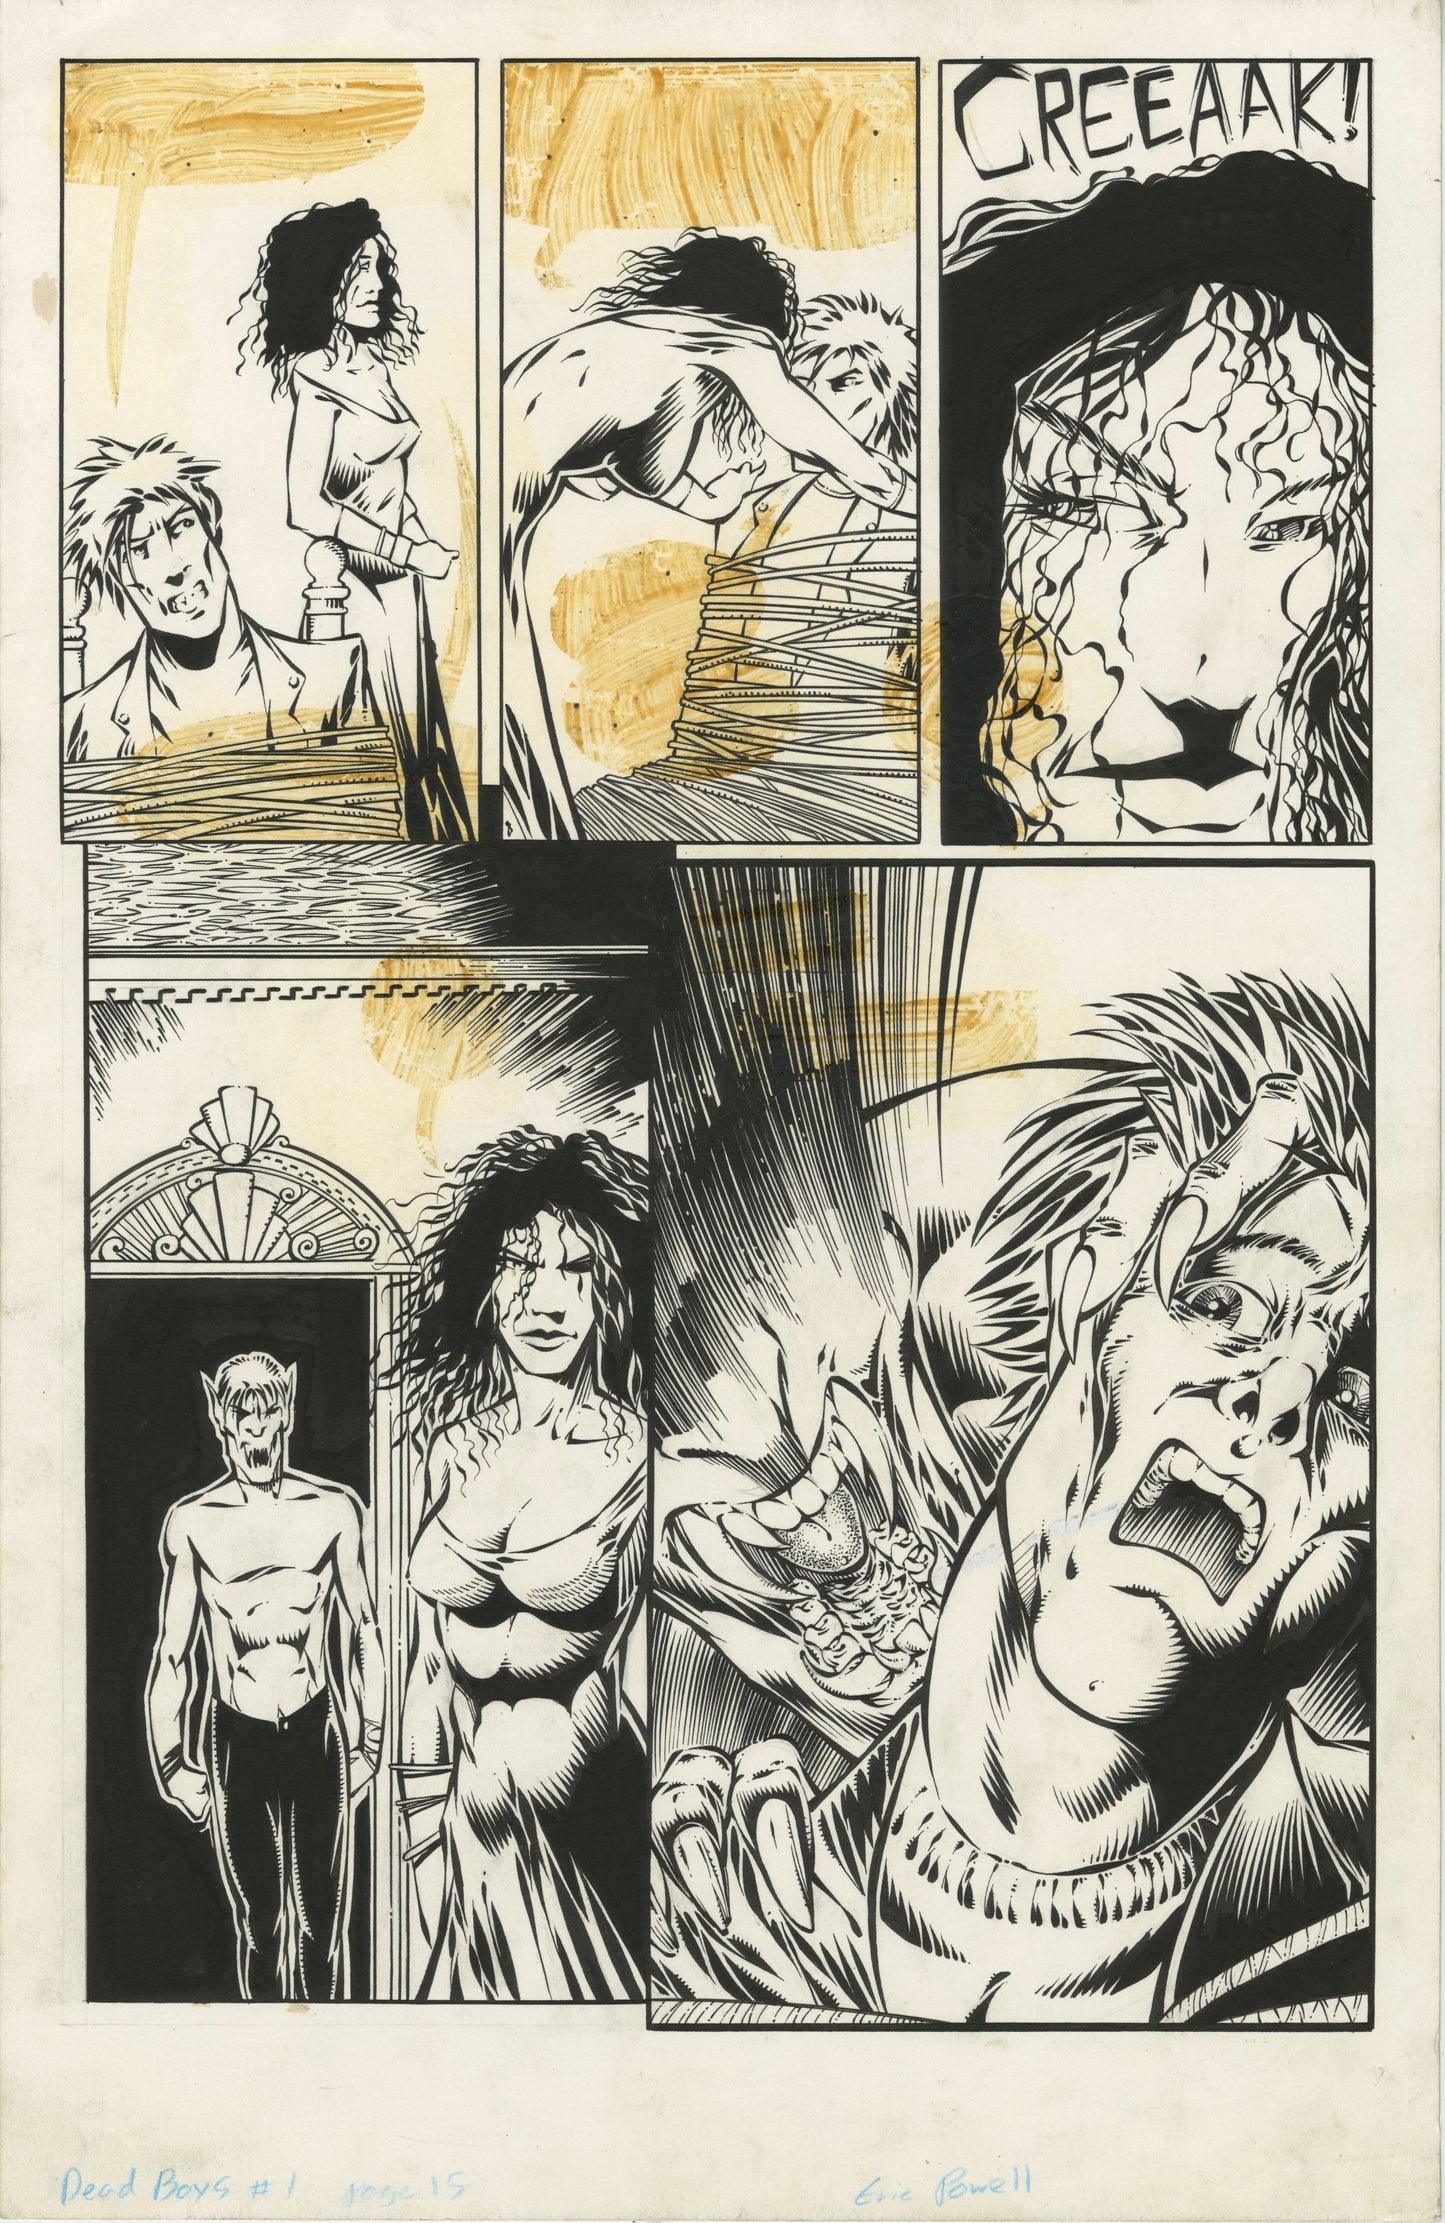 Dead Boys #1, page #15 (1997, unpublished)